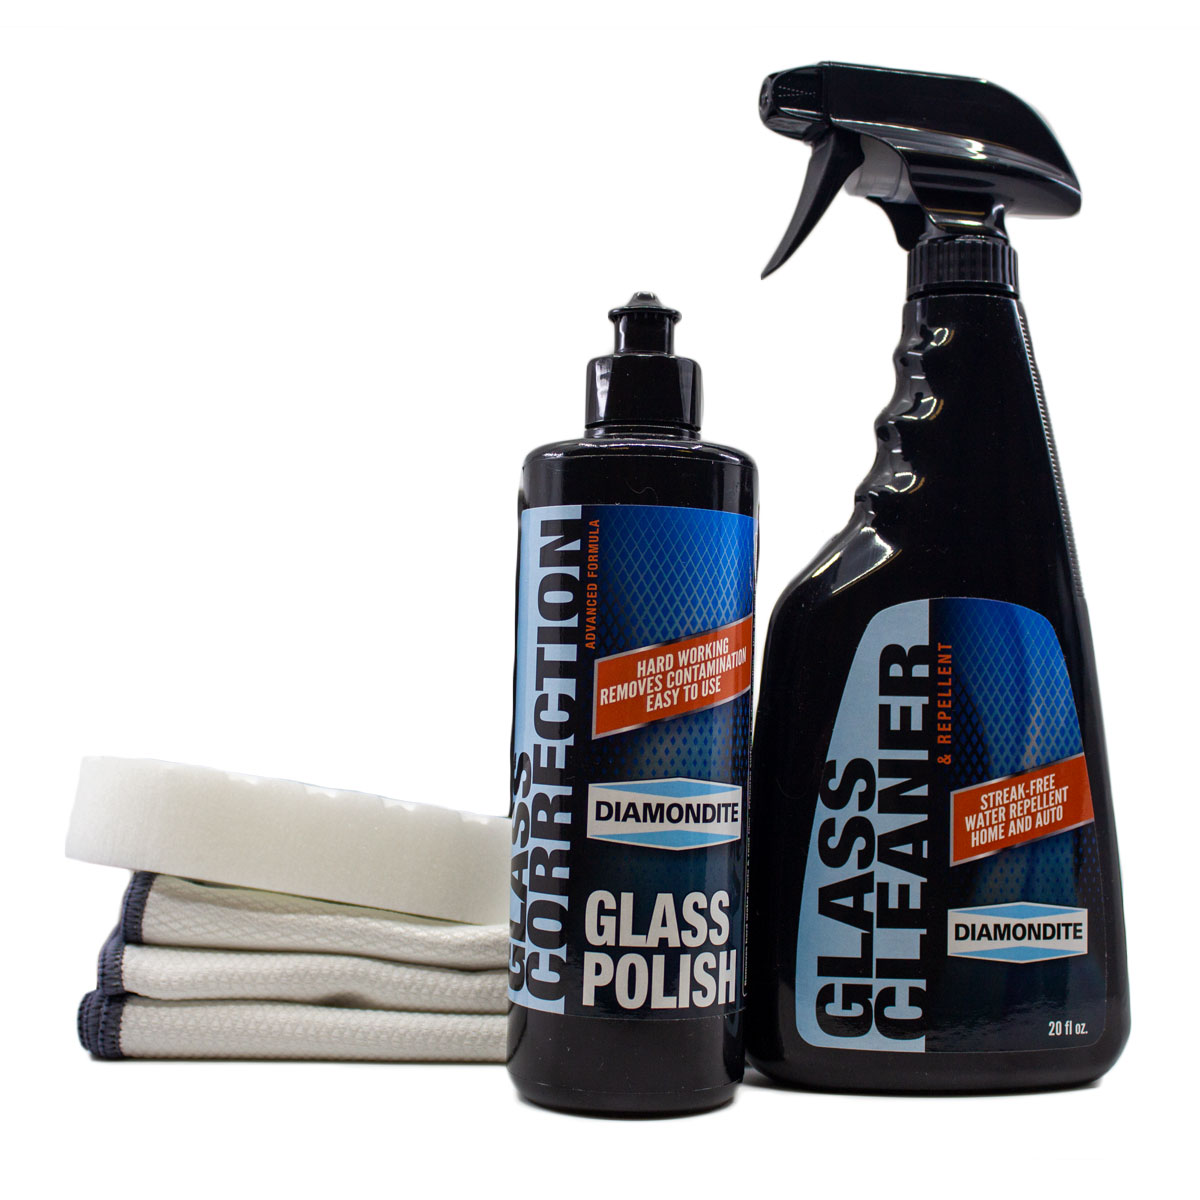 BreezMate Foaming Glass Cleaning Kit - 20888120